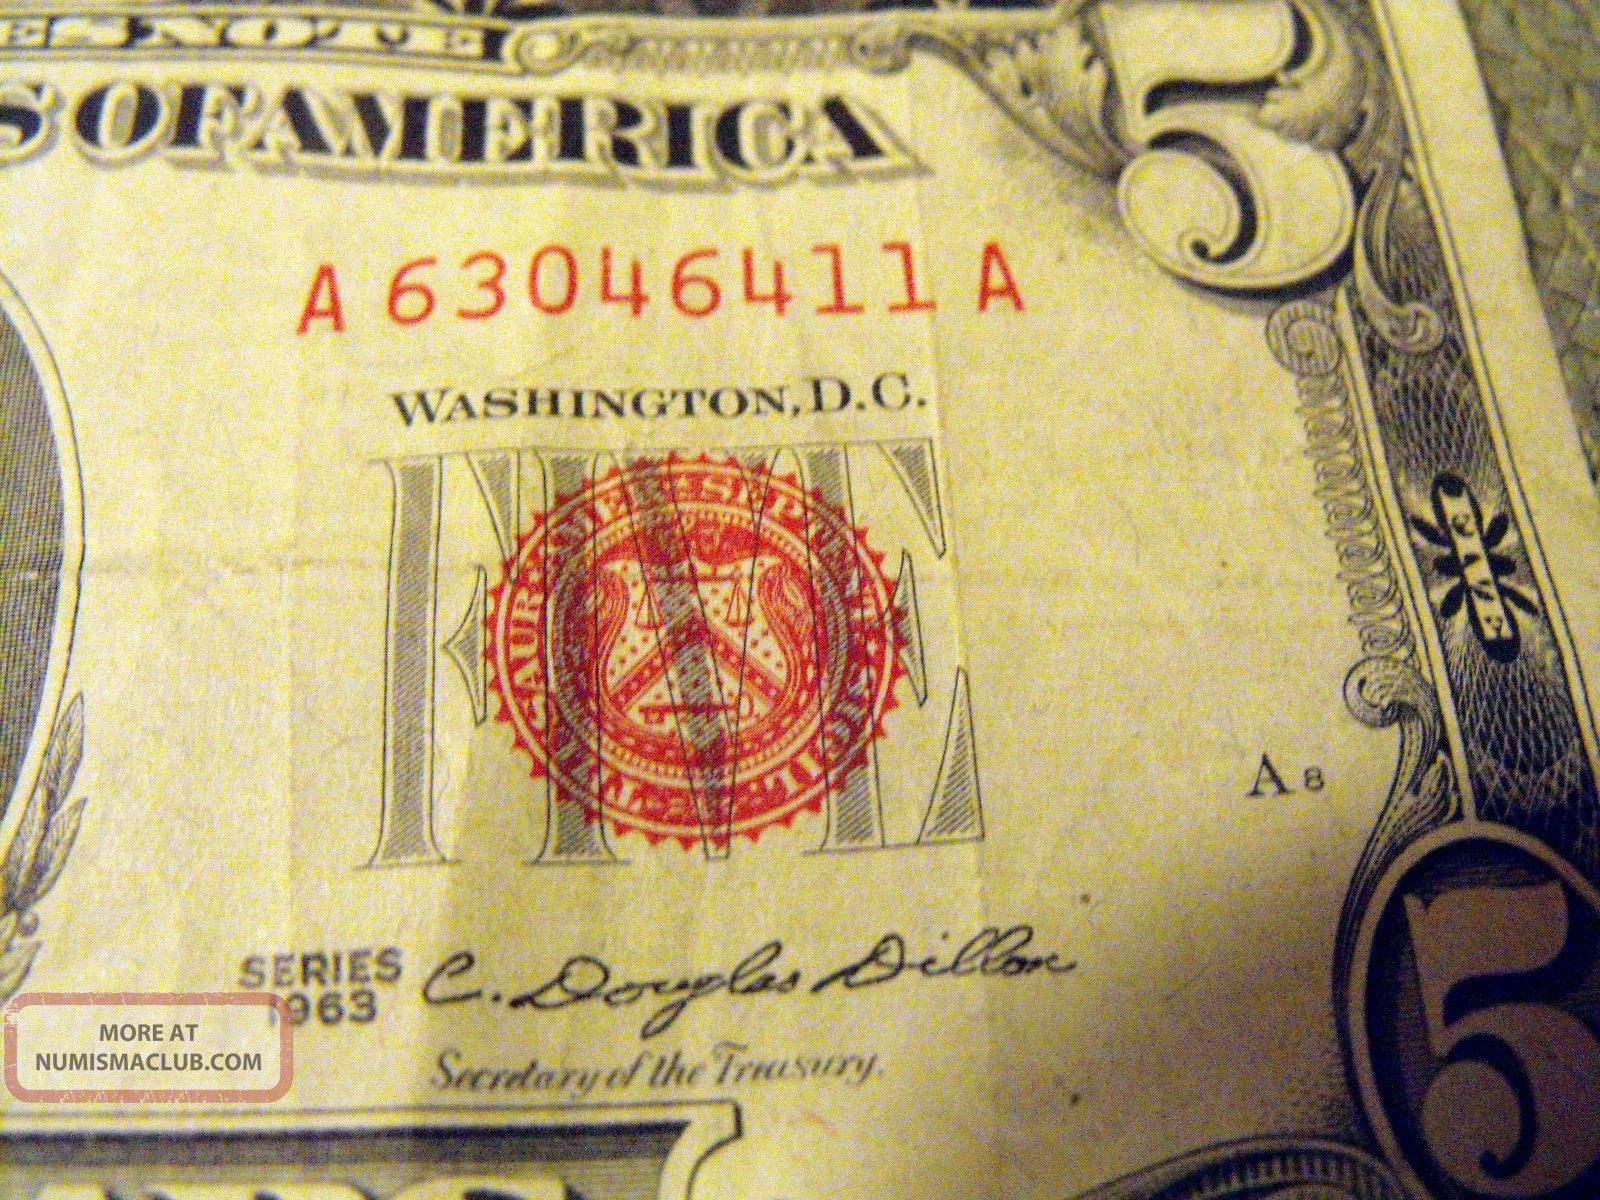 Rare Us Five Dollar Bill - 1963 - Red Ink